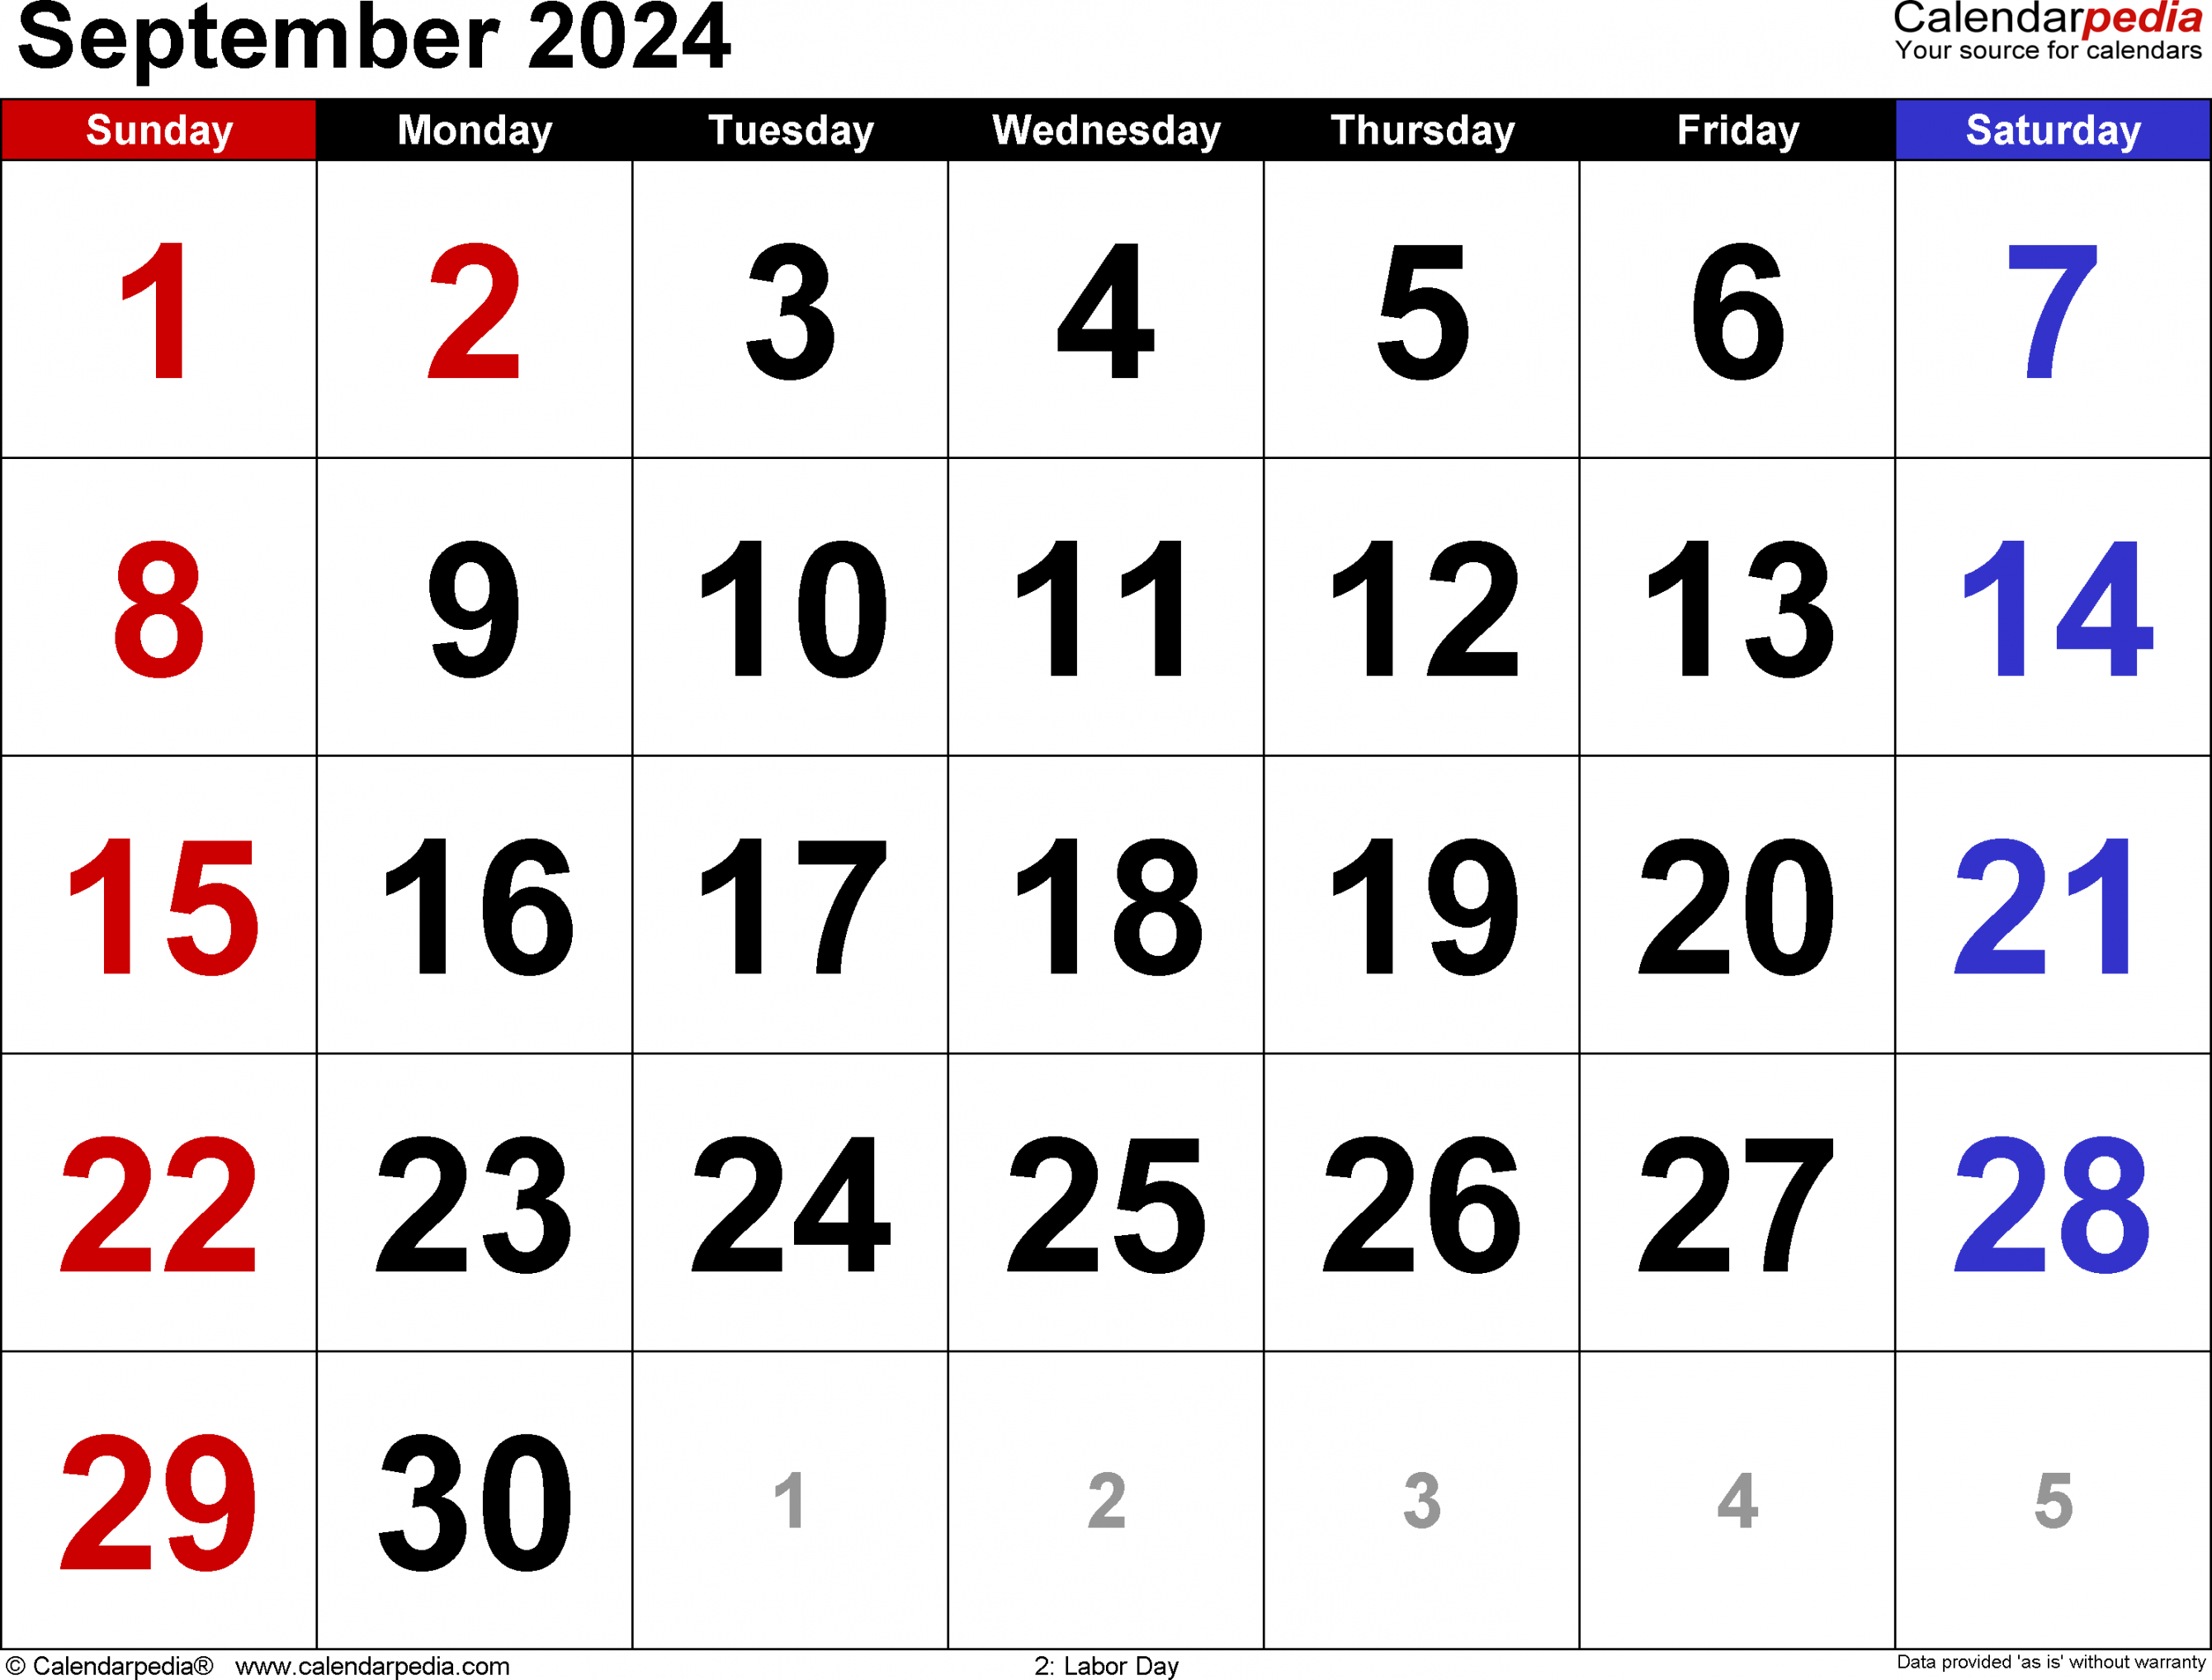 www.calendarpedia